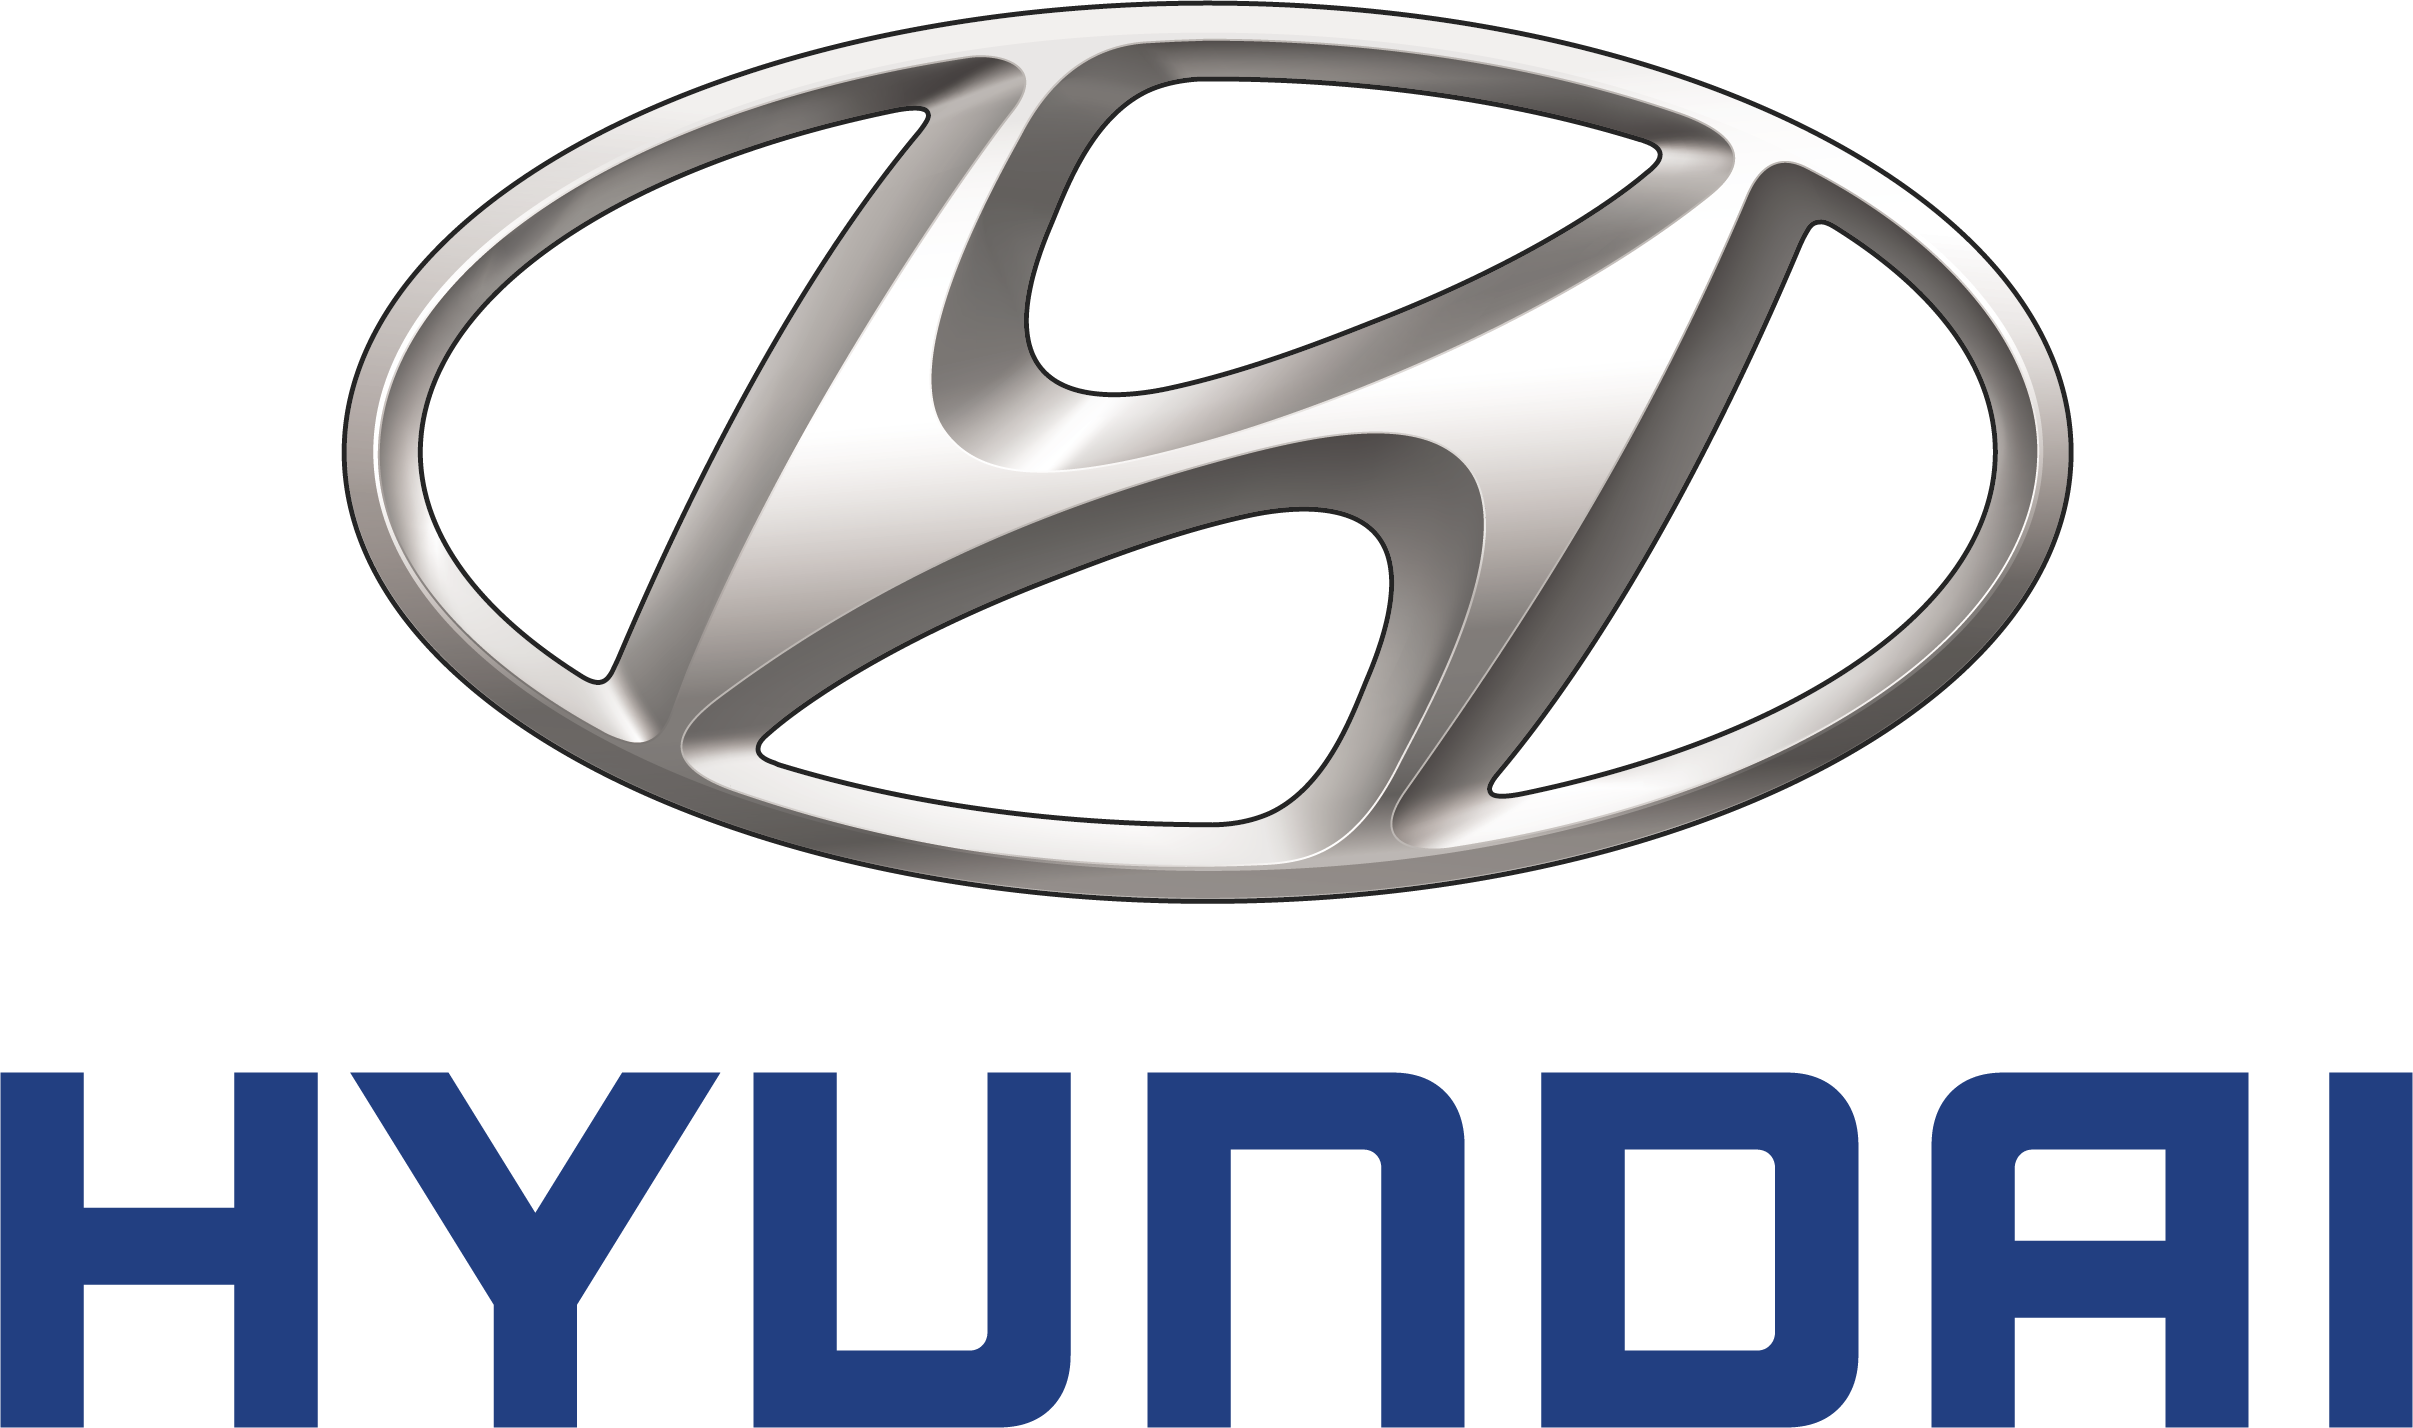 Hyundai Logo Png - Hyundai, Transparent background PNG HD thumbnail